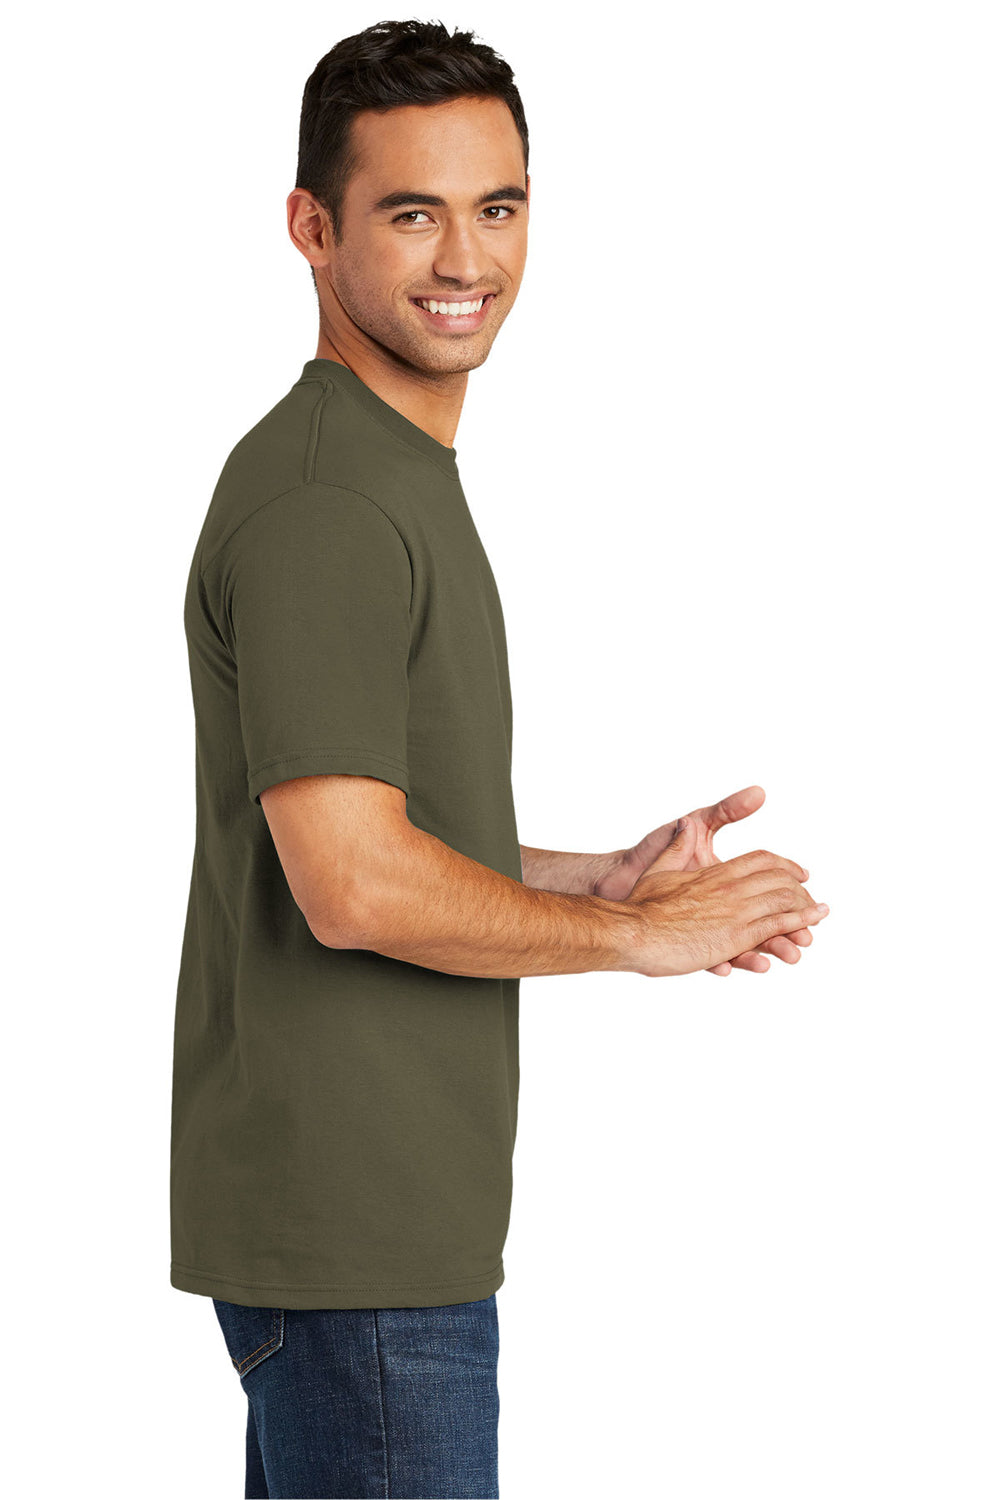 Port & Company USA100 Mens USA Made Short Sleeve Crewneck T-Shirt Olive Drab Green Side